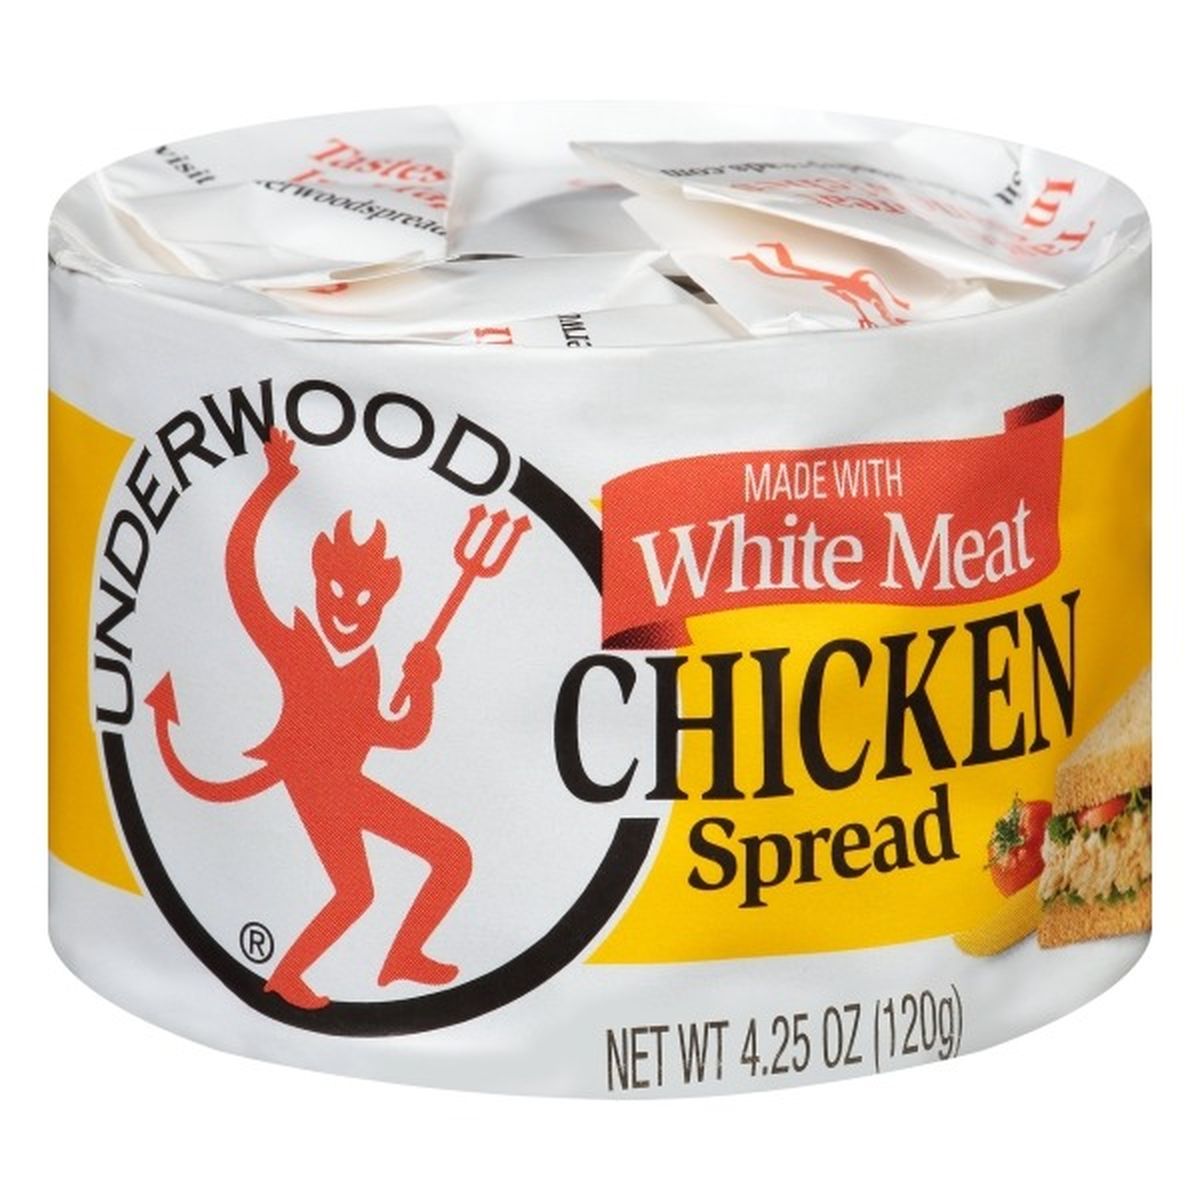 Calories in Underwood Spread, Chicken